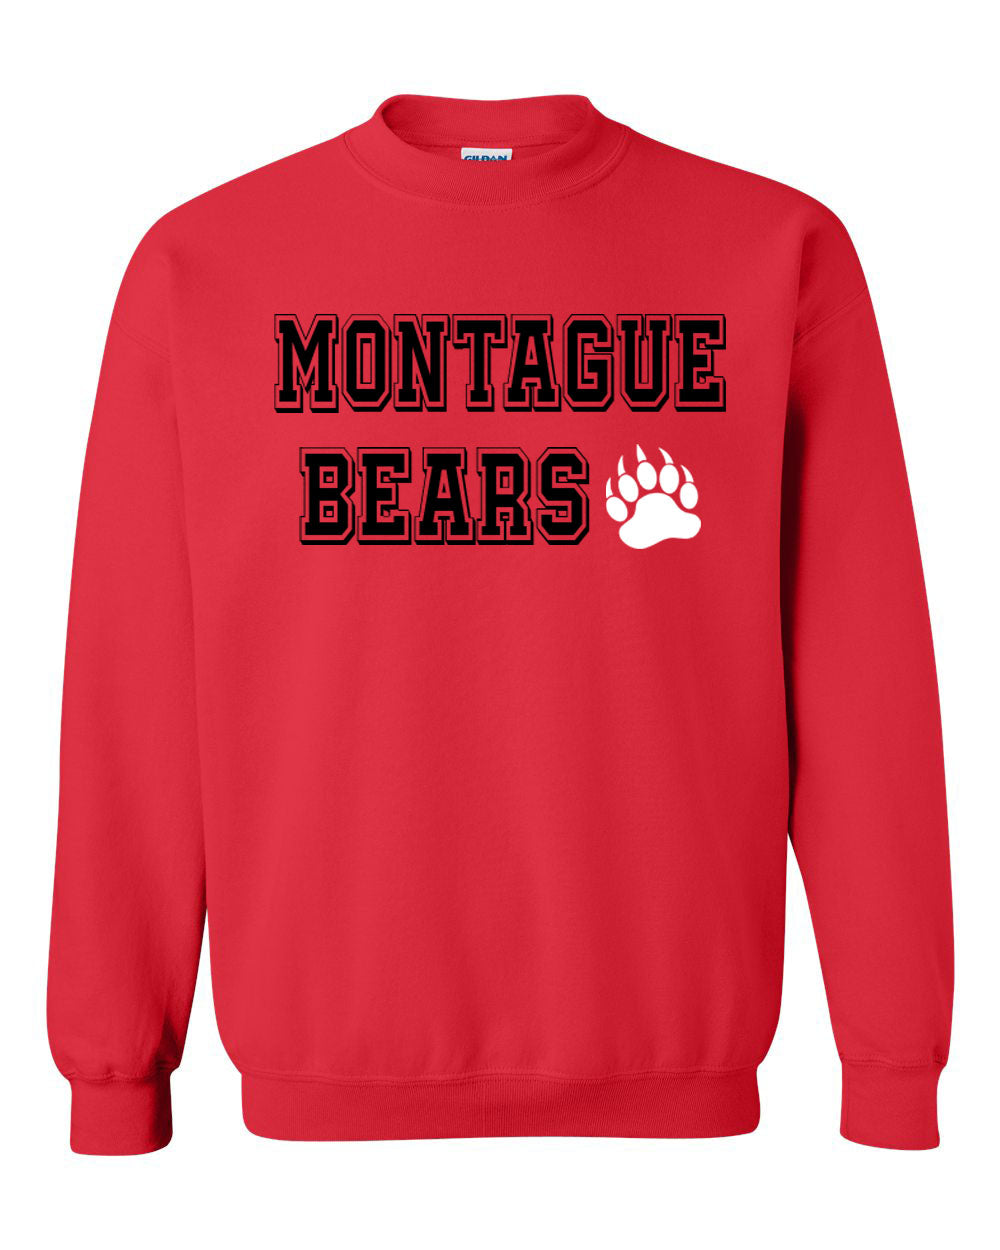 Montague Design Design 6 non hooded sweatshirt